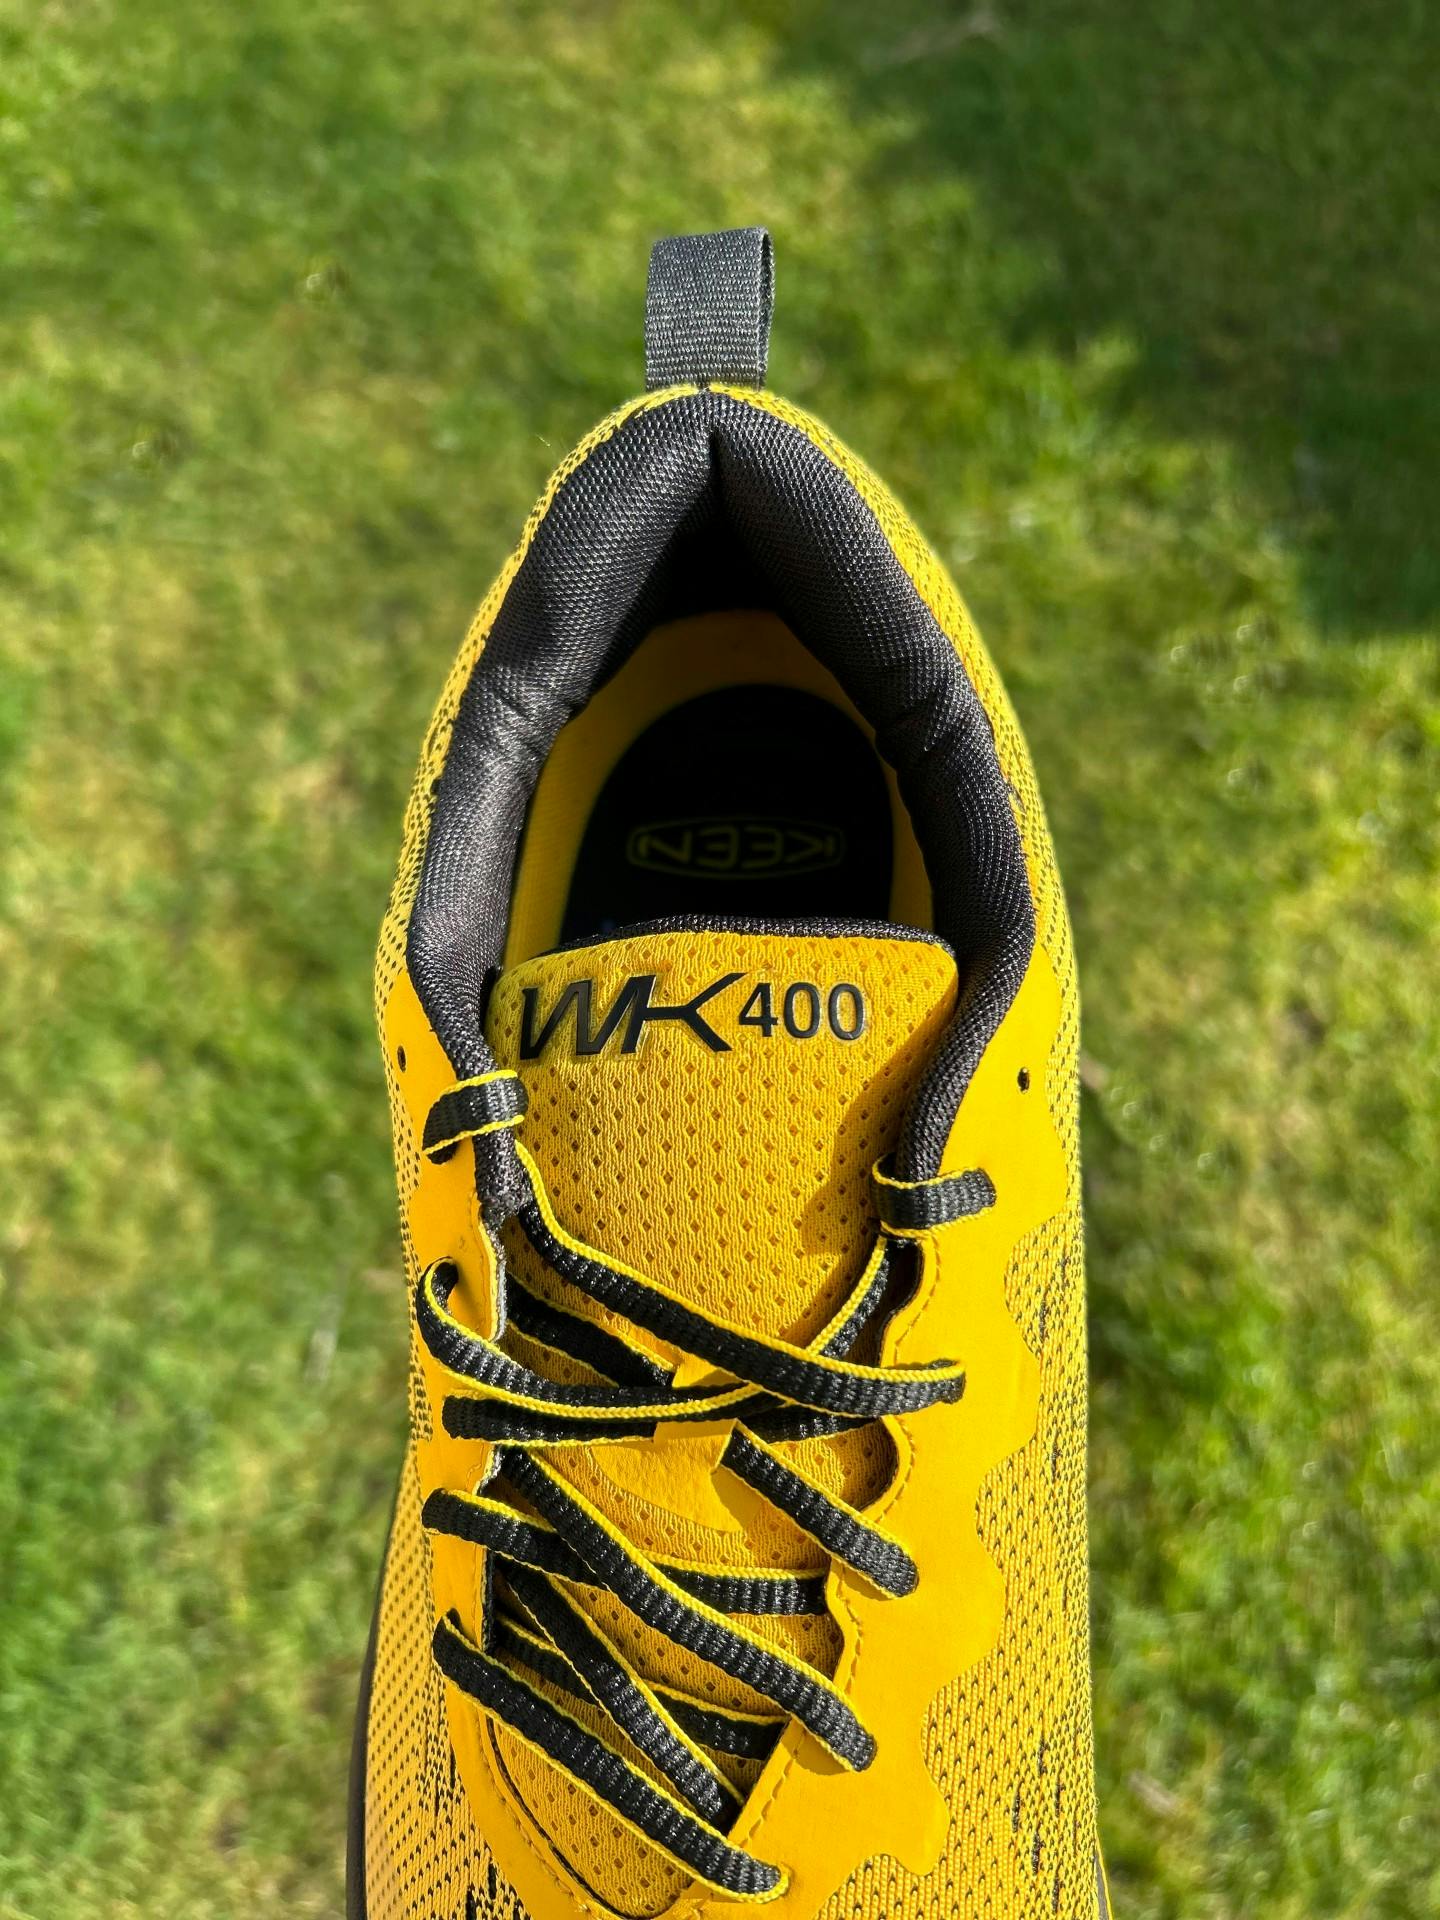 keen-wk400-walking-shoe